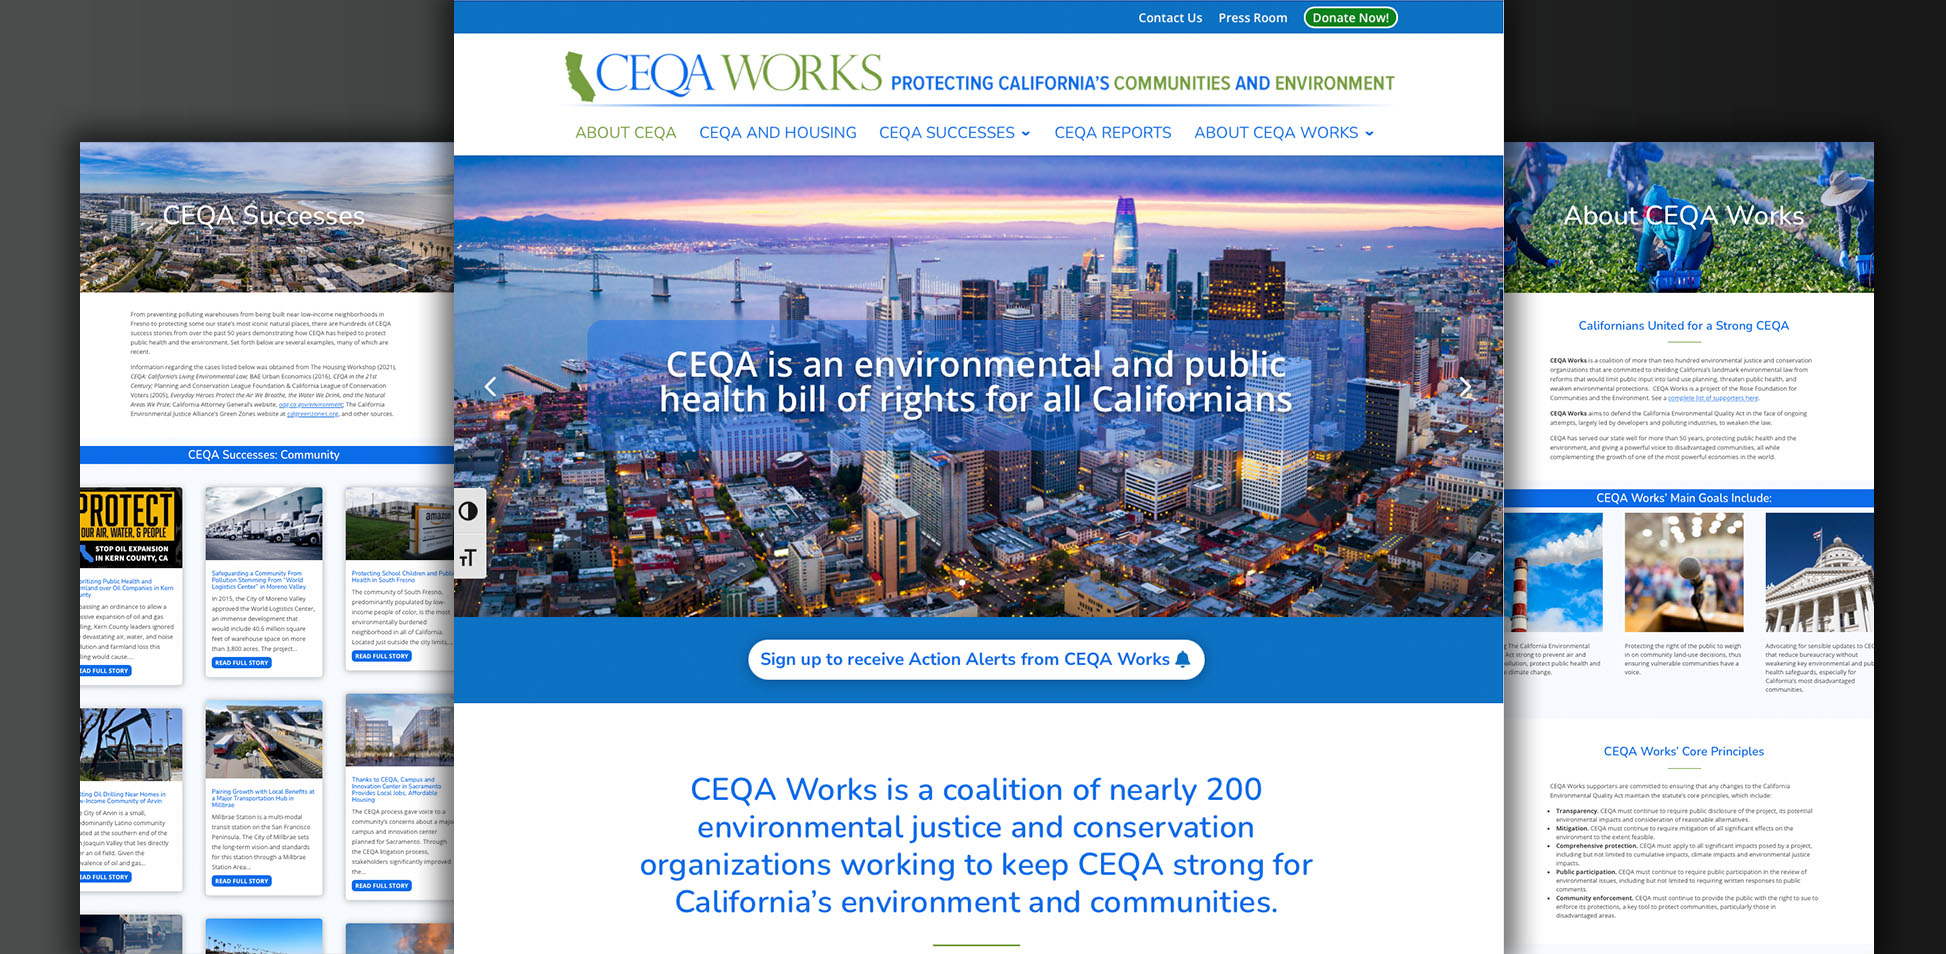 CEQA Works